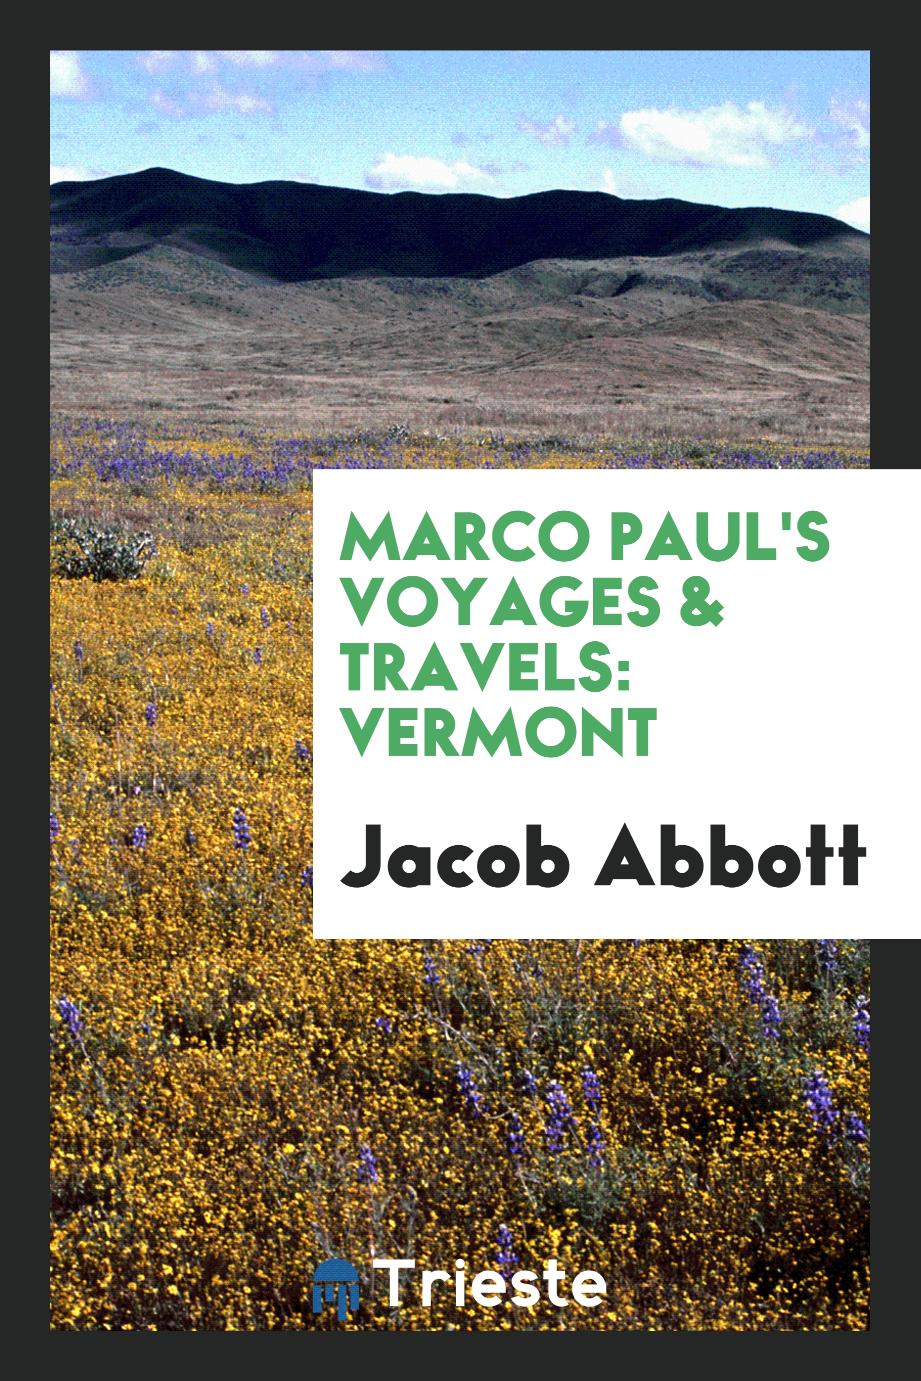 Marco Paul's voyages & travels: Vermont